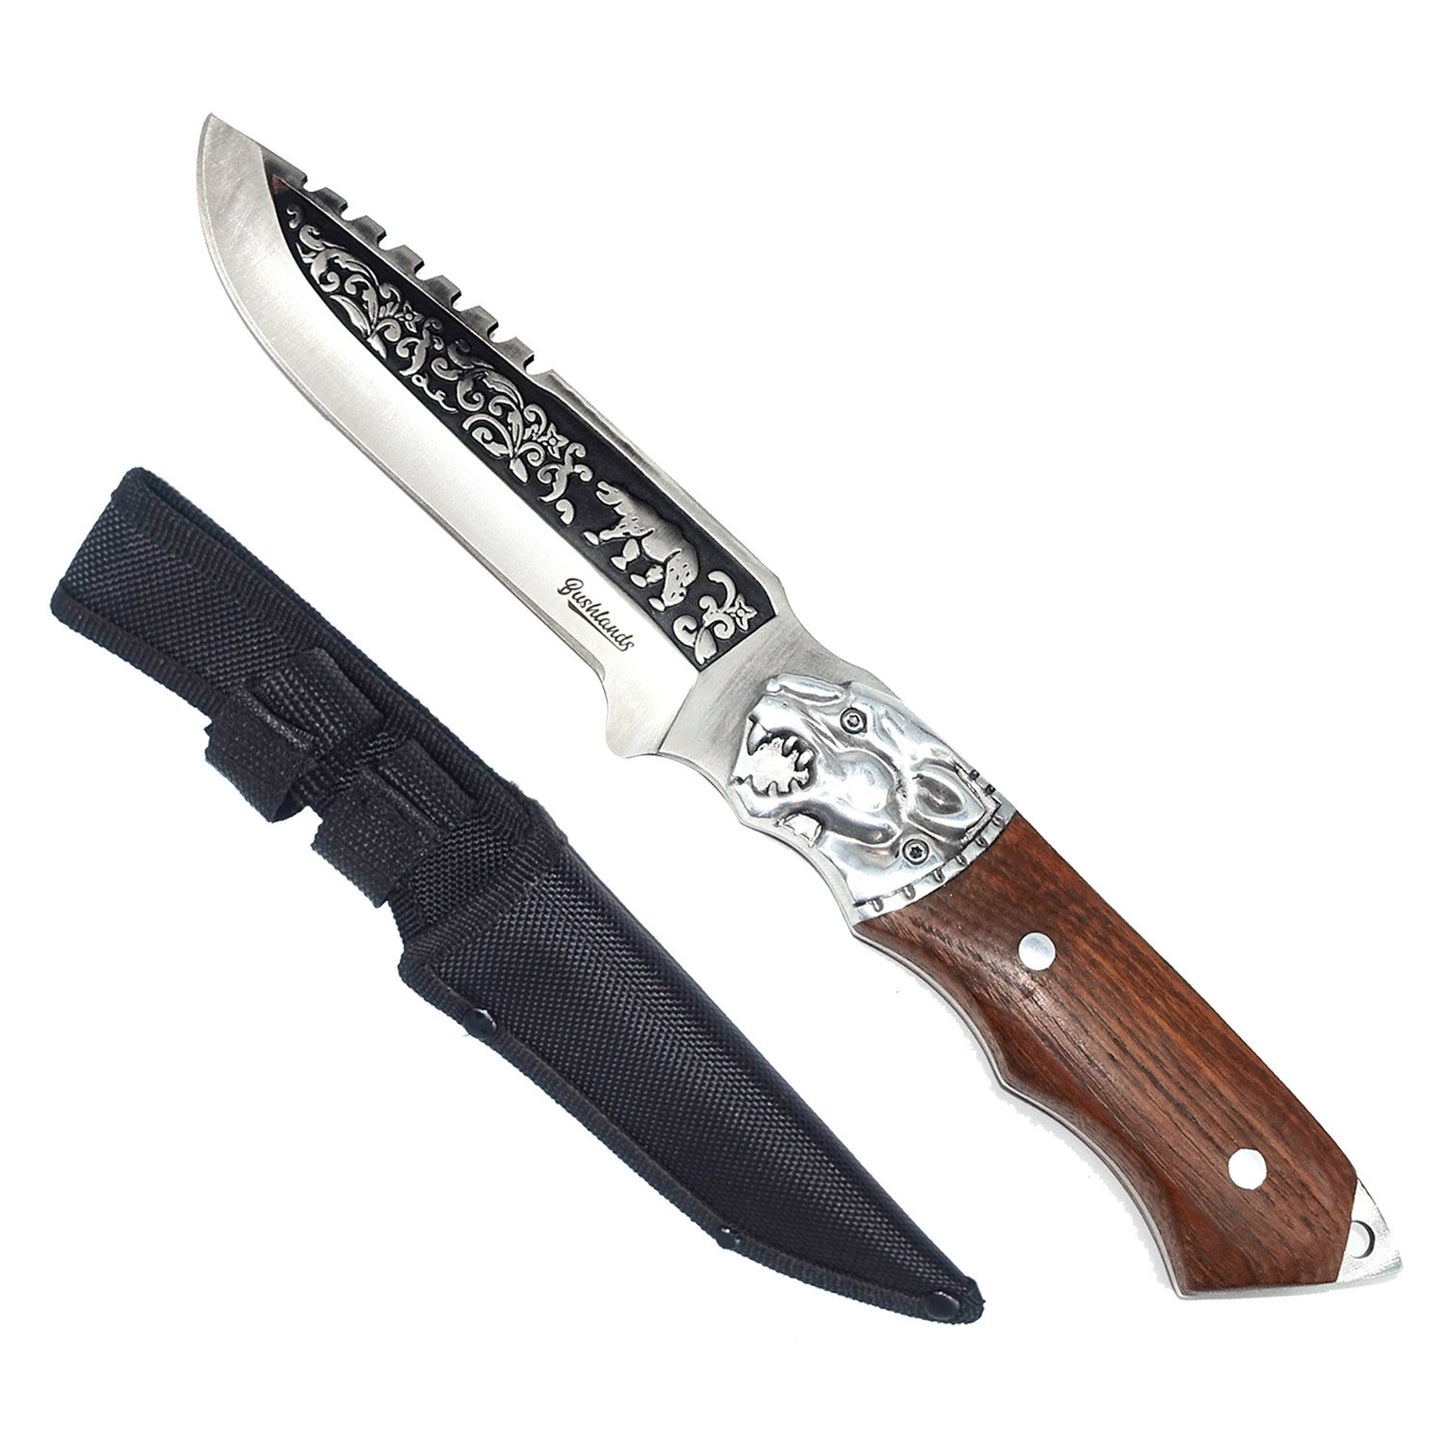 Bushlands Bushlands Fix Blade Hunting Knife 5.5 Inch Coated Blade - With Polished Pakkawood Handle #1575 Dark Slate Gray